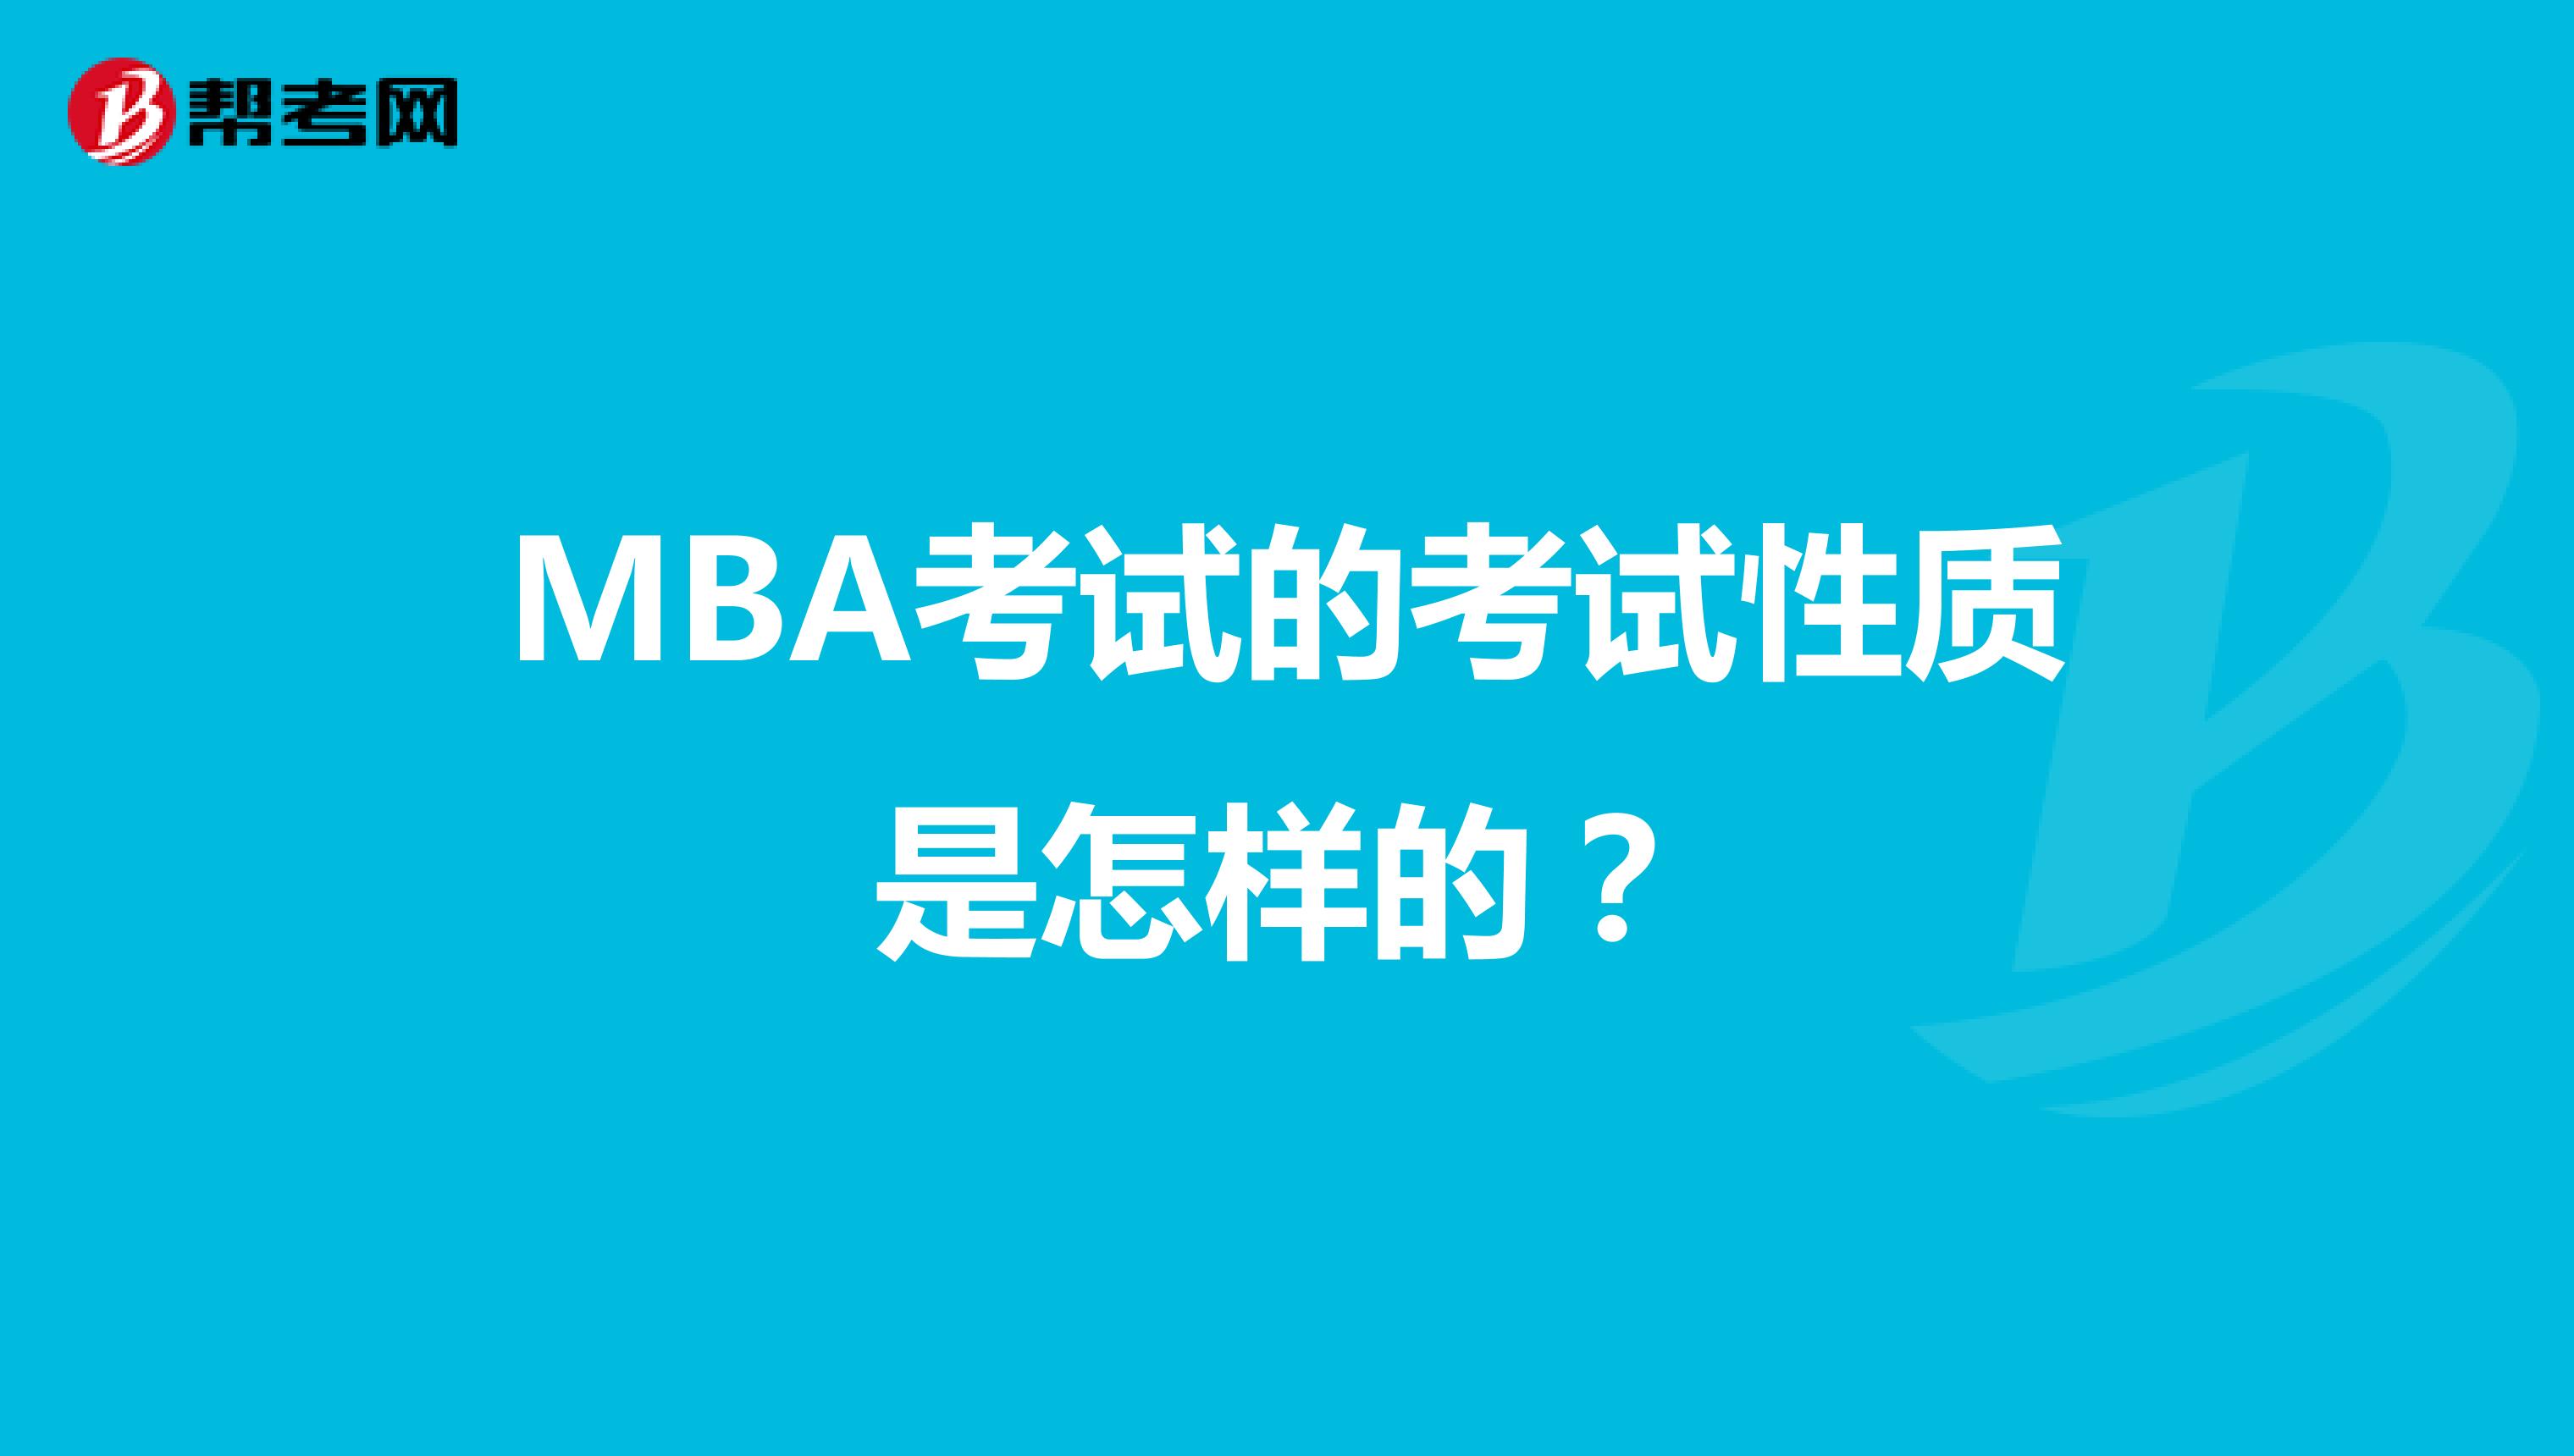 MBA考试的考试性质是怎样的？